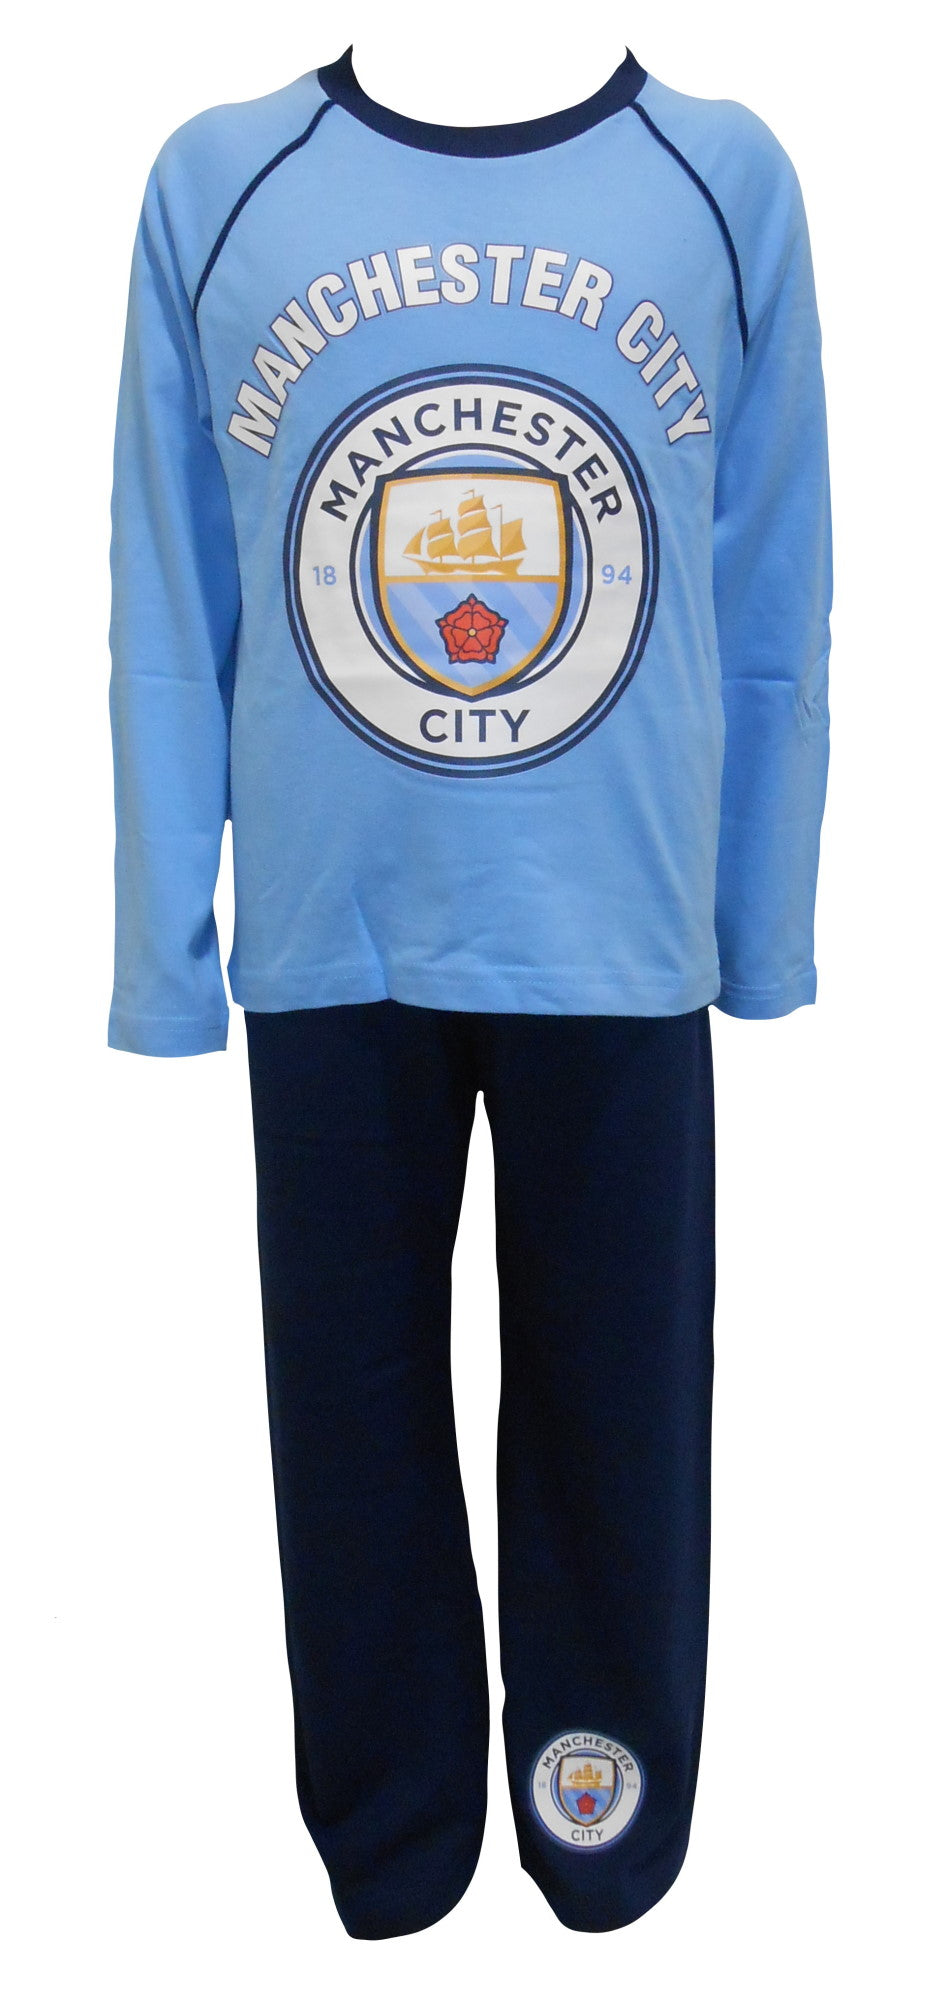 Manchester City Football Club Boys Pyjamas